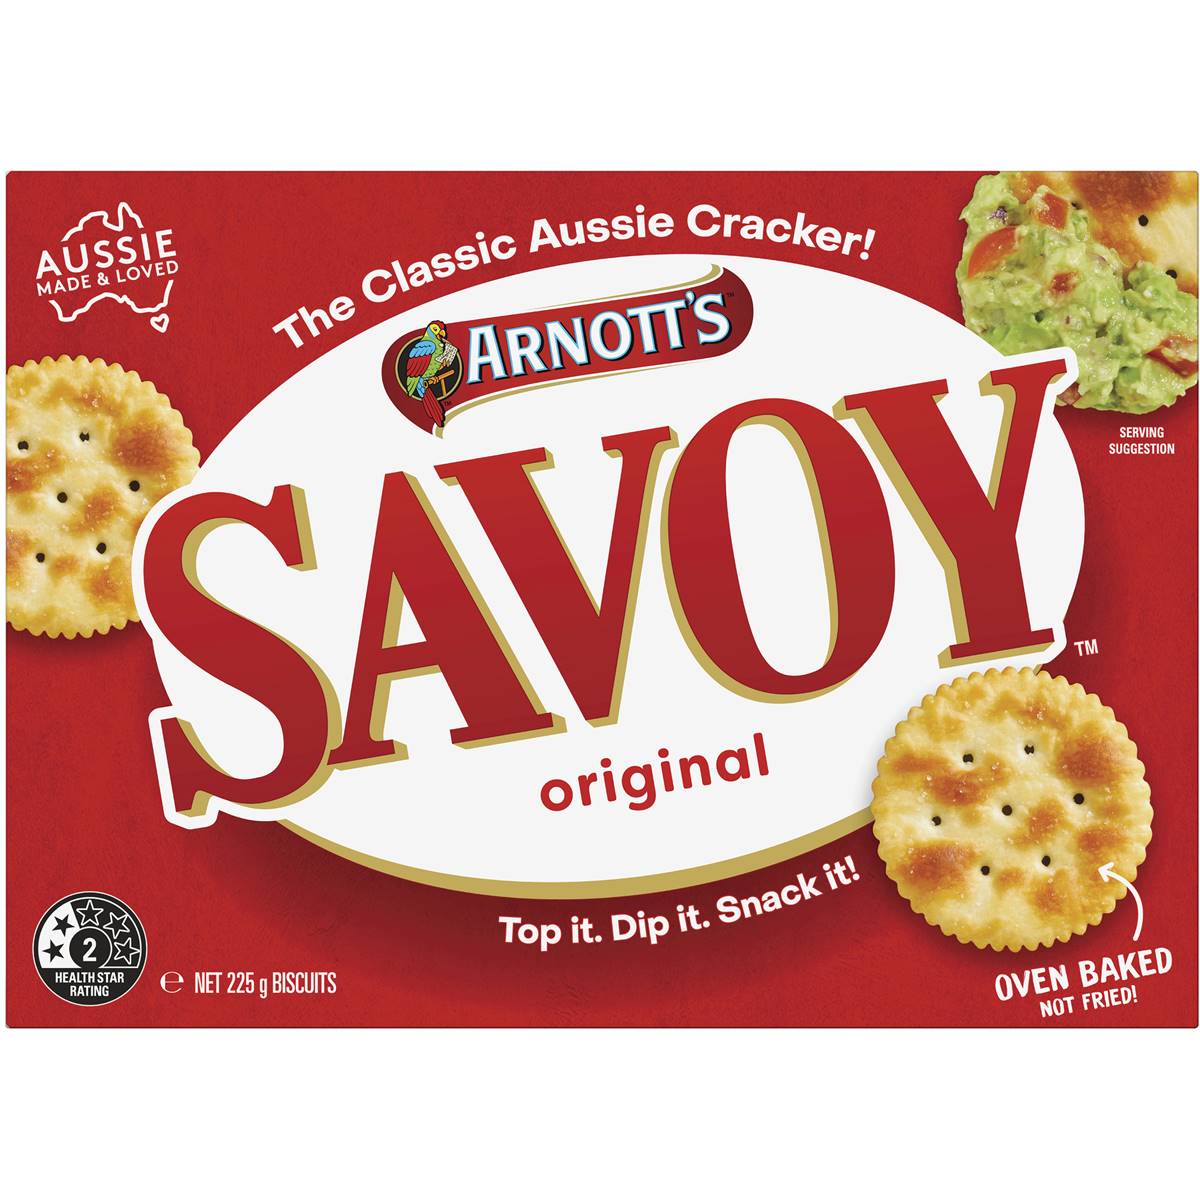 Arnotts Savoy Original Crackers 225g